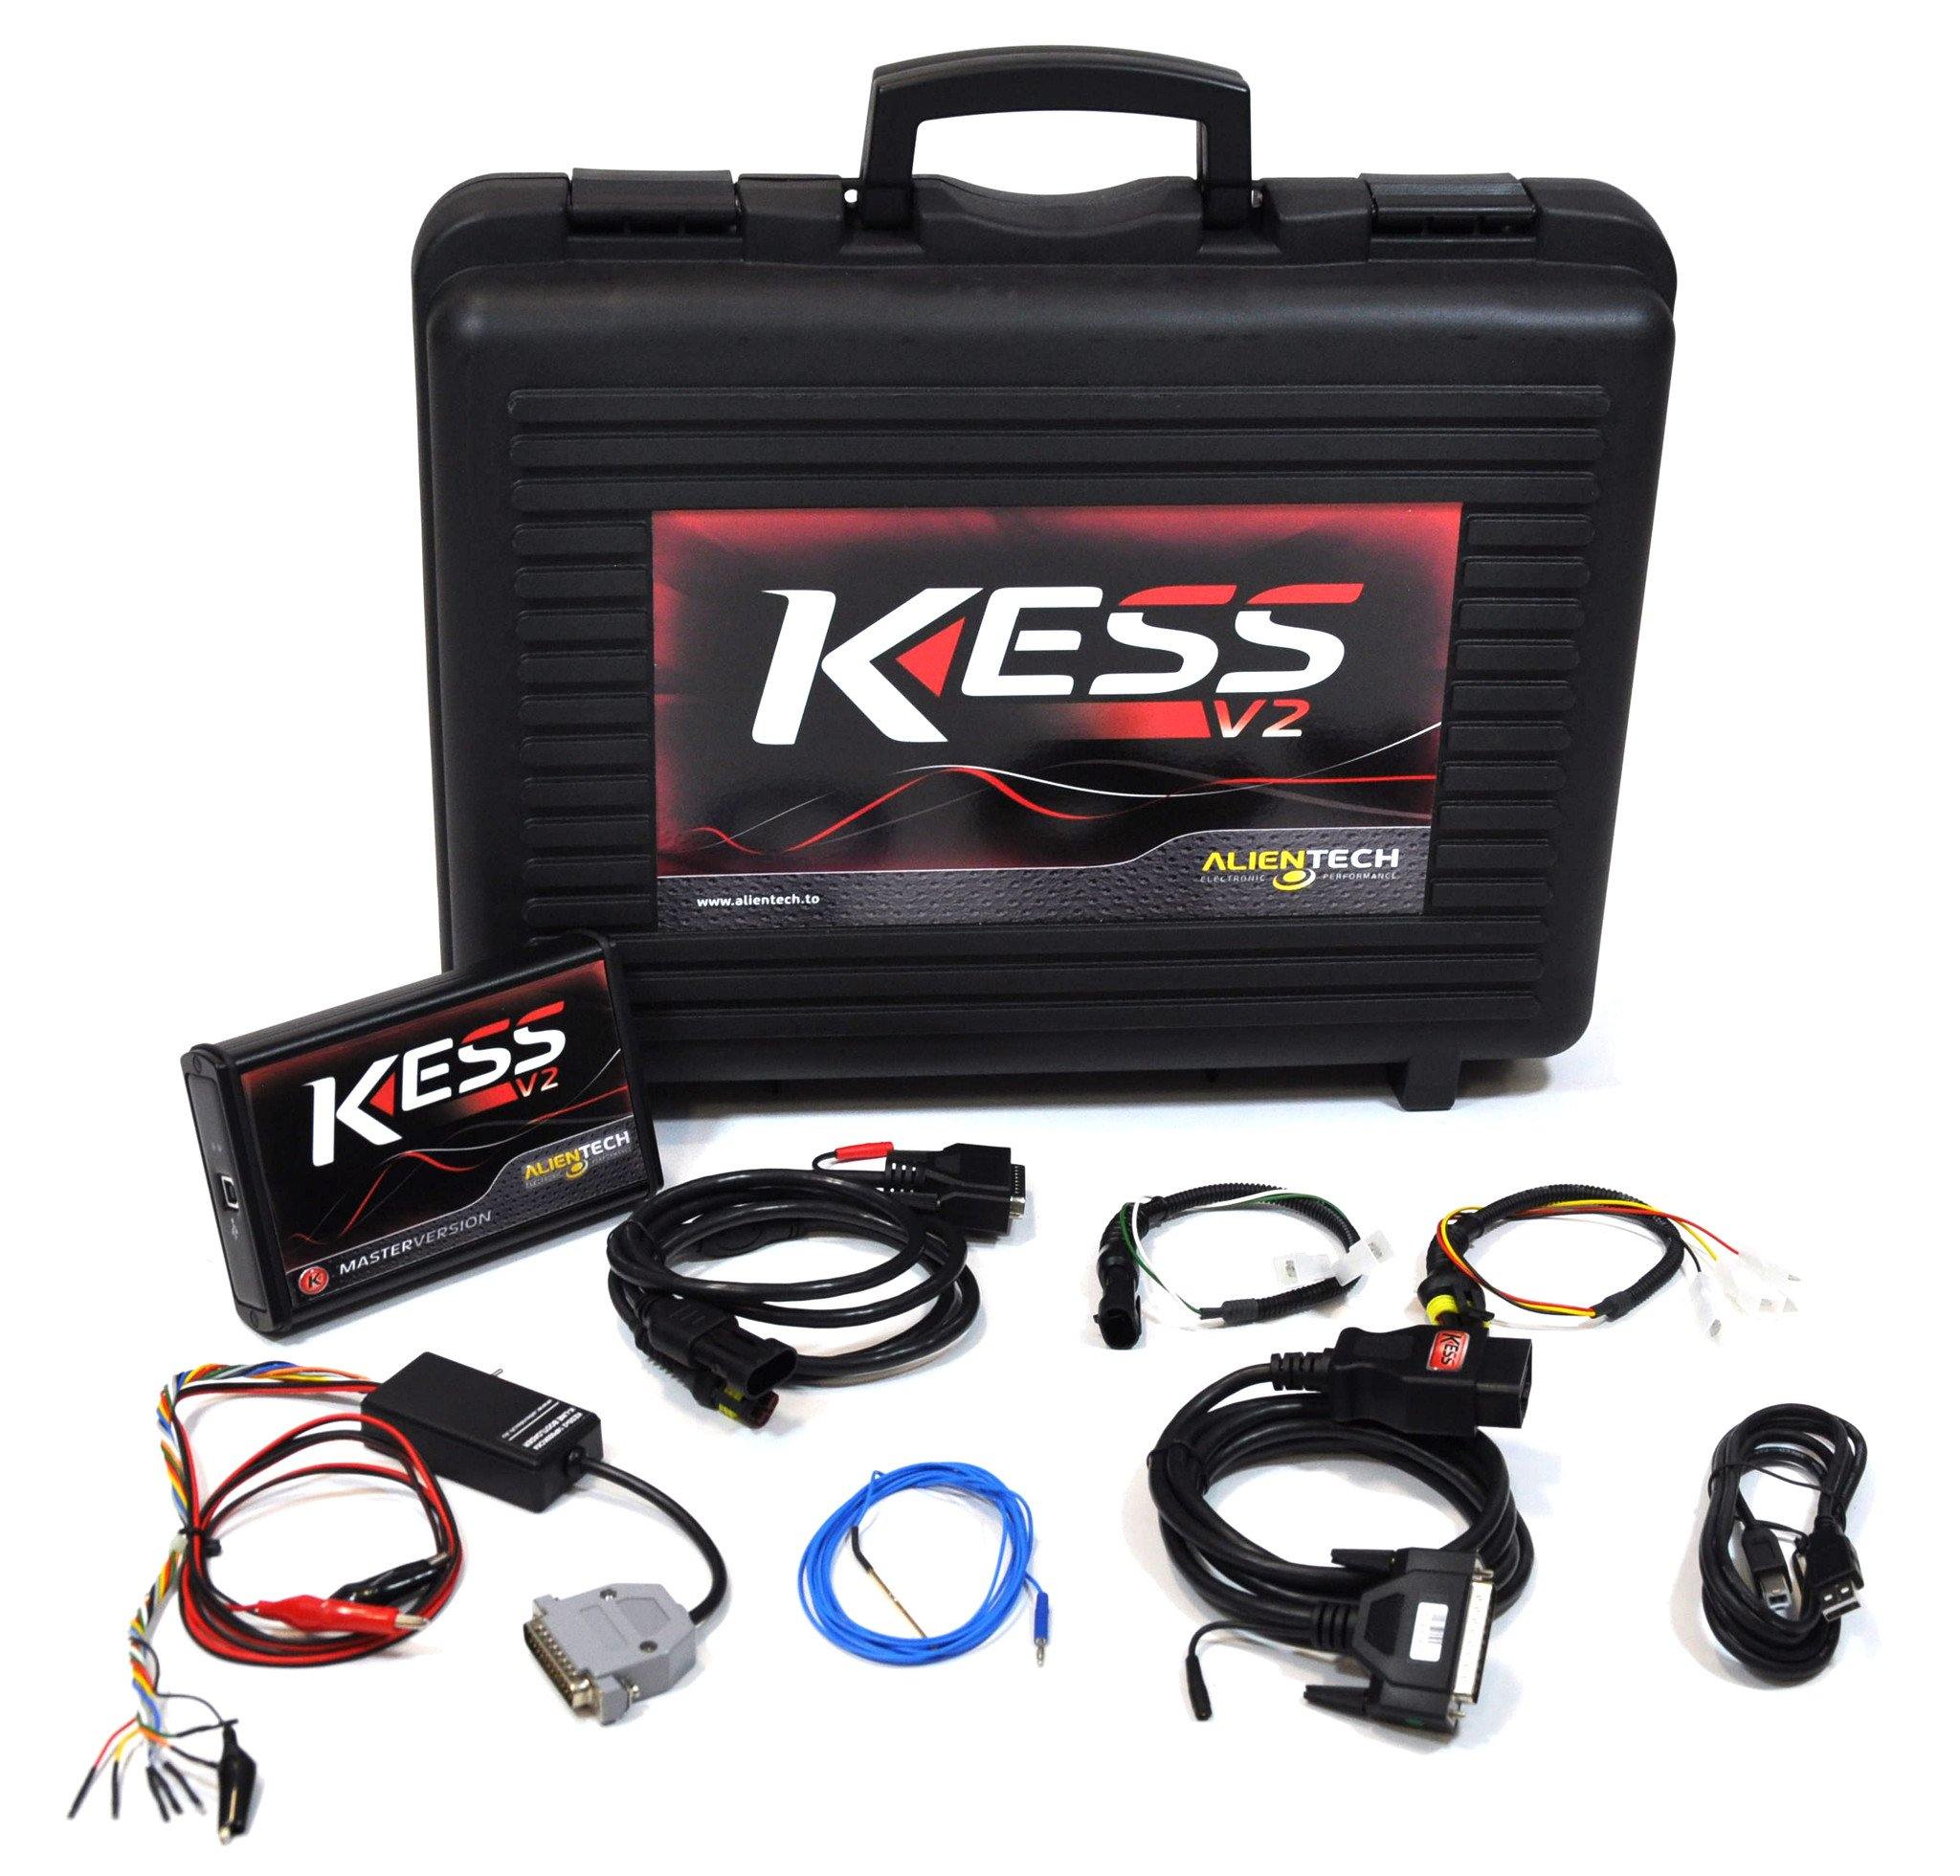 Kess V2 Master Hardware (Tool)